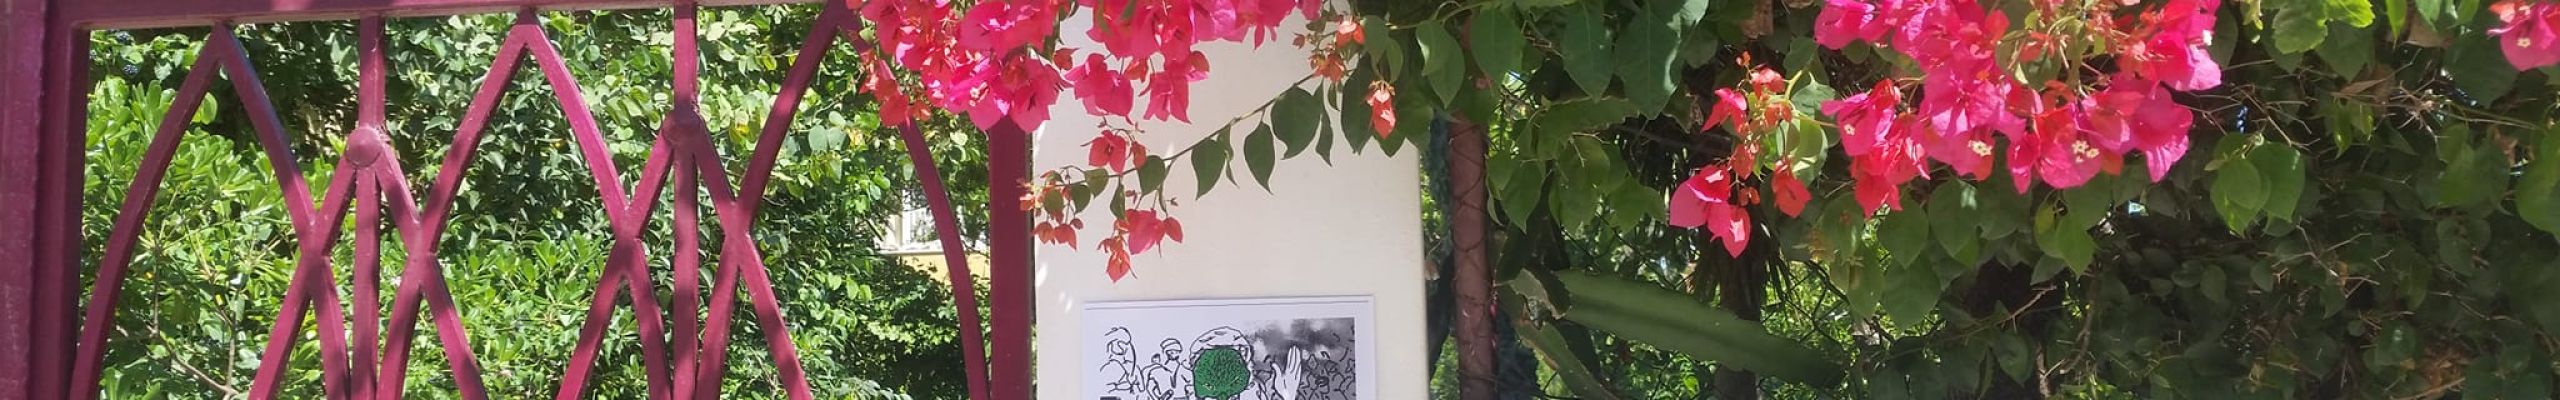 «PERFORMANCE ΤΗΣ PASCALE WEBER» στον κήπο της σύγχρονης πινακοθήκης Villa Ροδόπη στο Ροδόπη